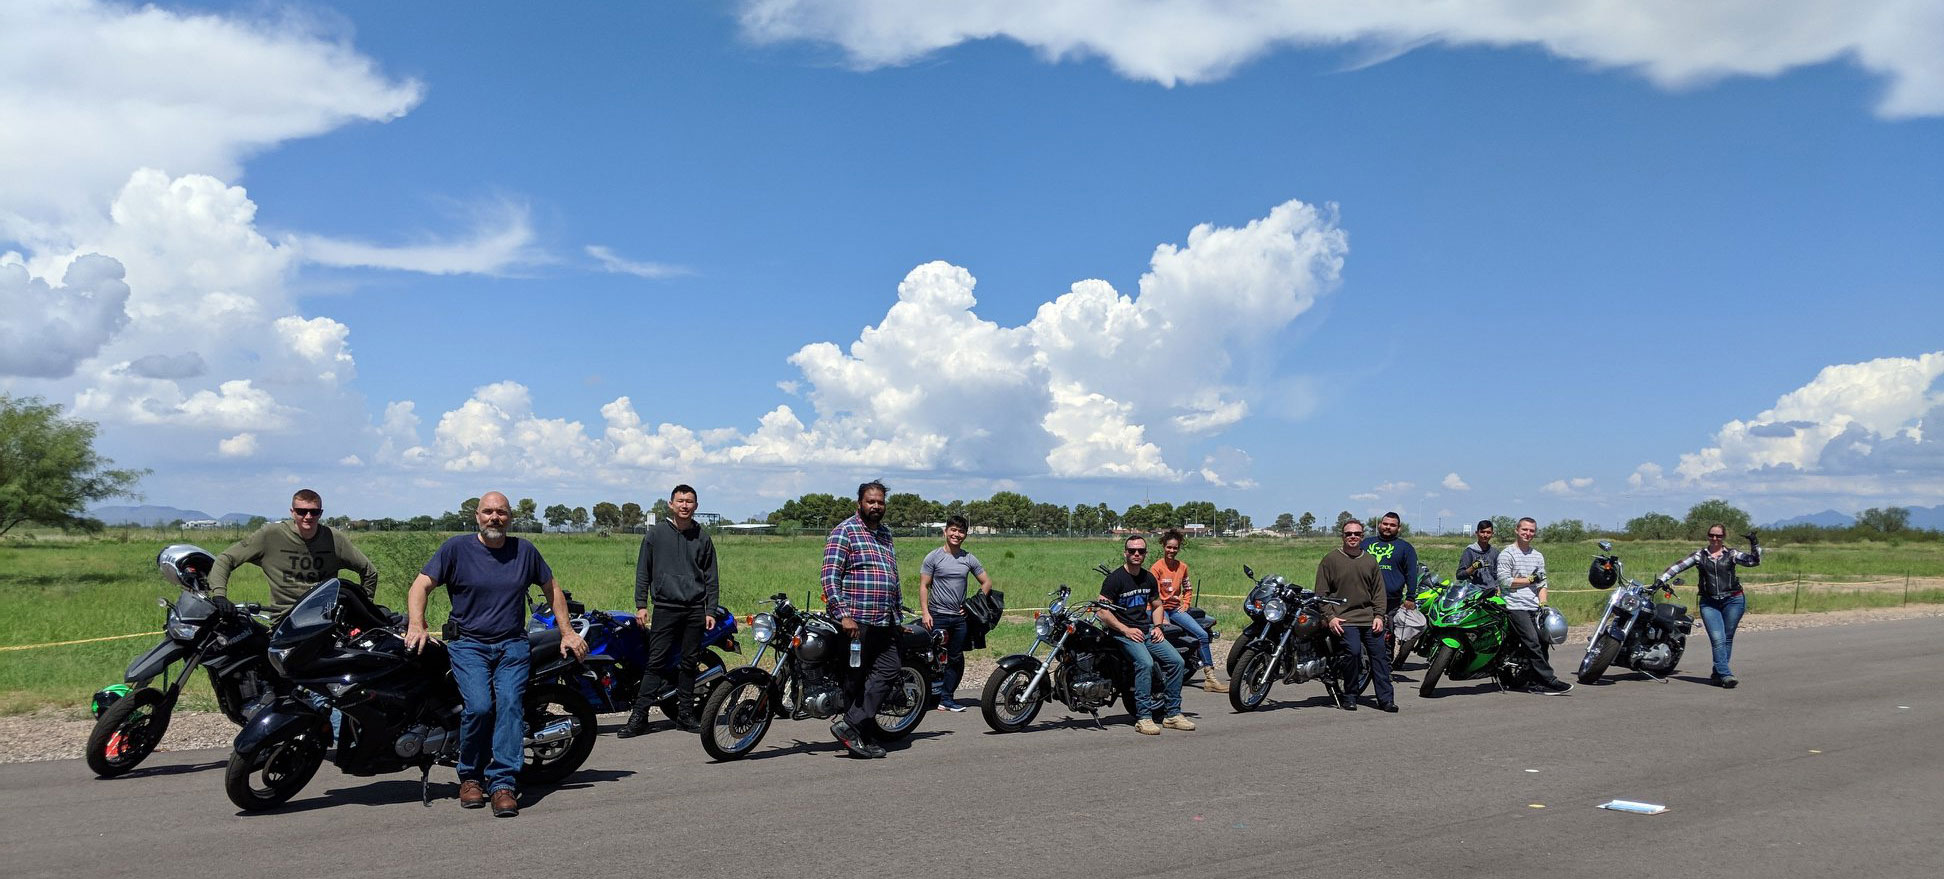 Ride Arizona MTC 2-Day Motorcycle Training Course in Tucson, Arizona